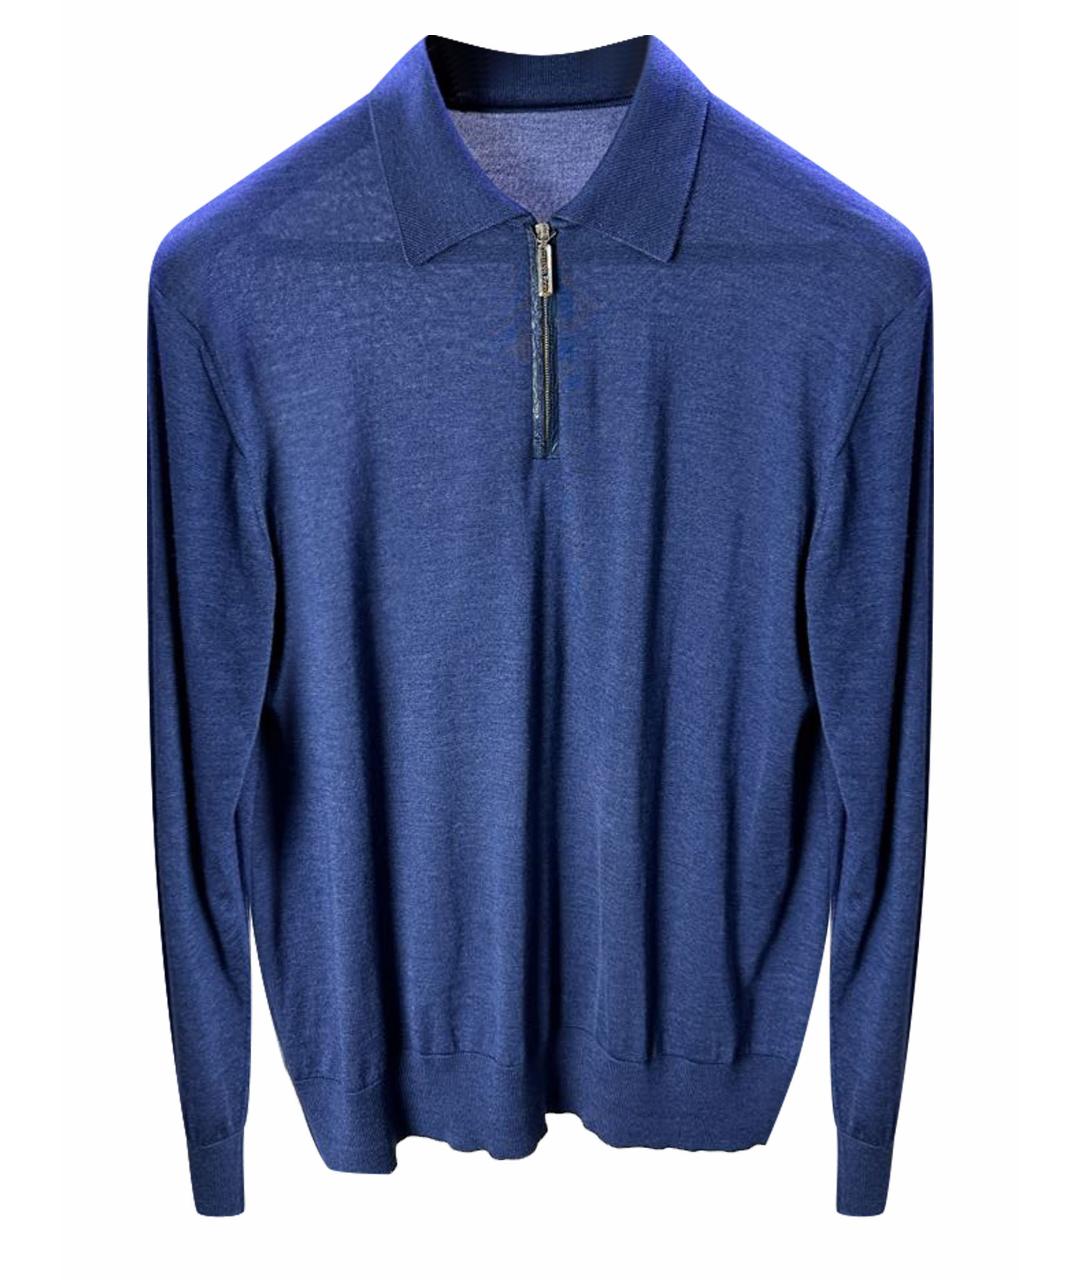 STEFANO RICCI Темно-синий джемпер / свитер, фото 1